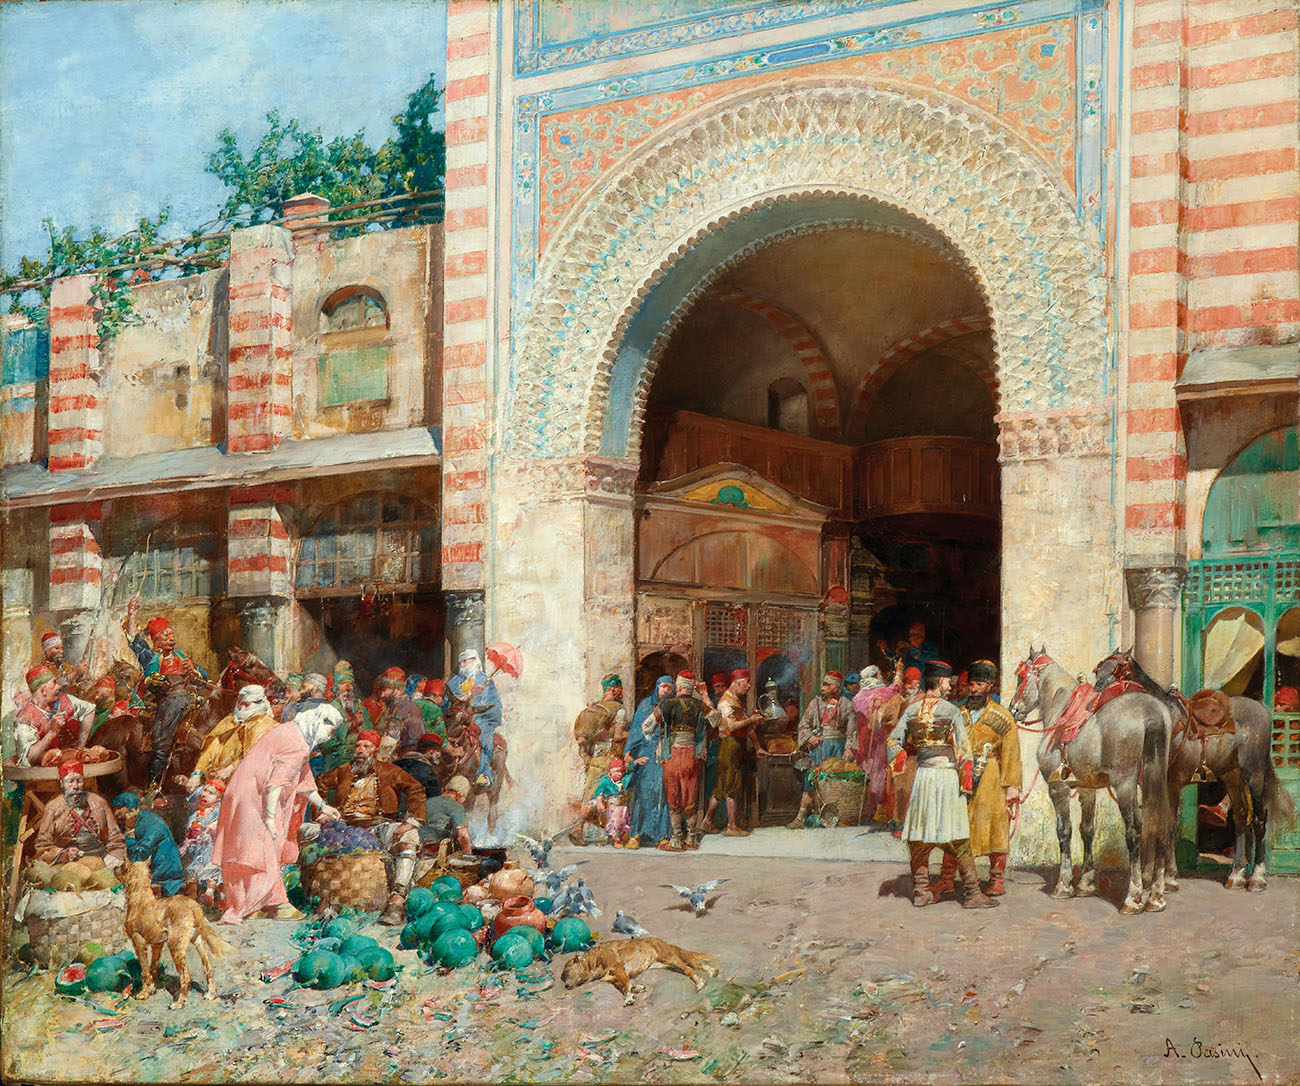 Alberto Pasini (1826–1899), Vor dem Eingang eines Basars, Öl auf Leinwand, 46 x 55 cm, € 150.000-200.000